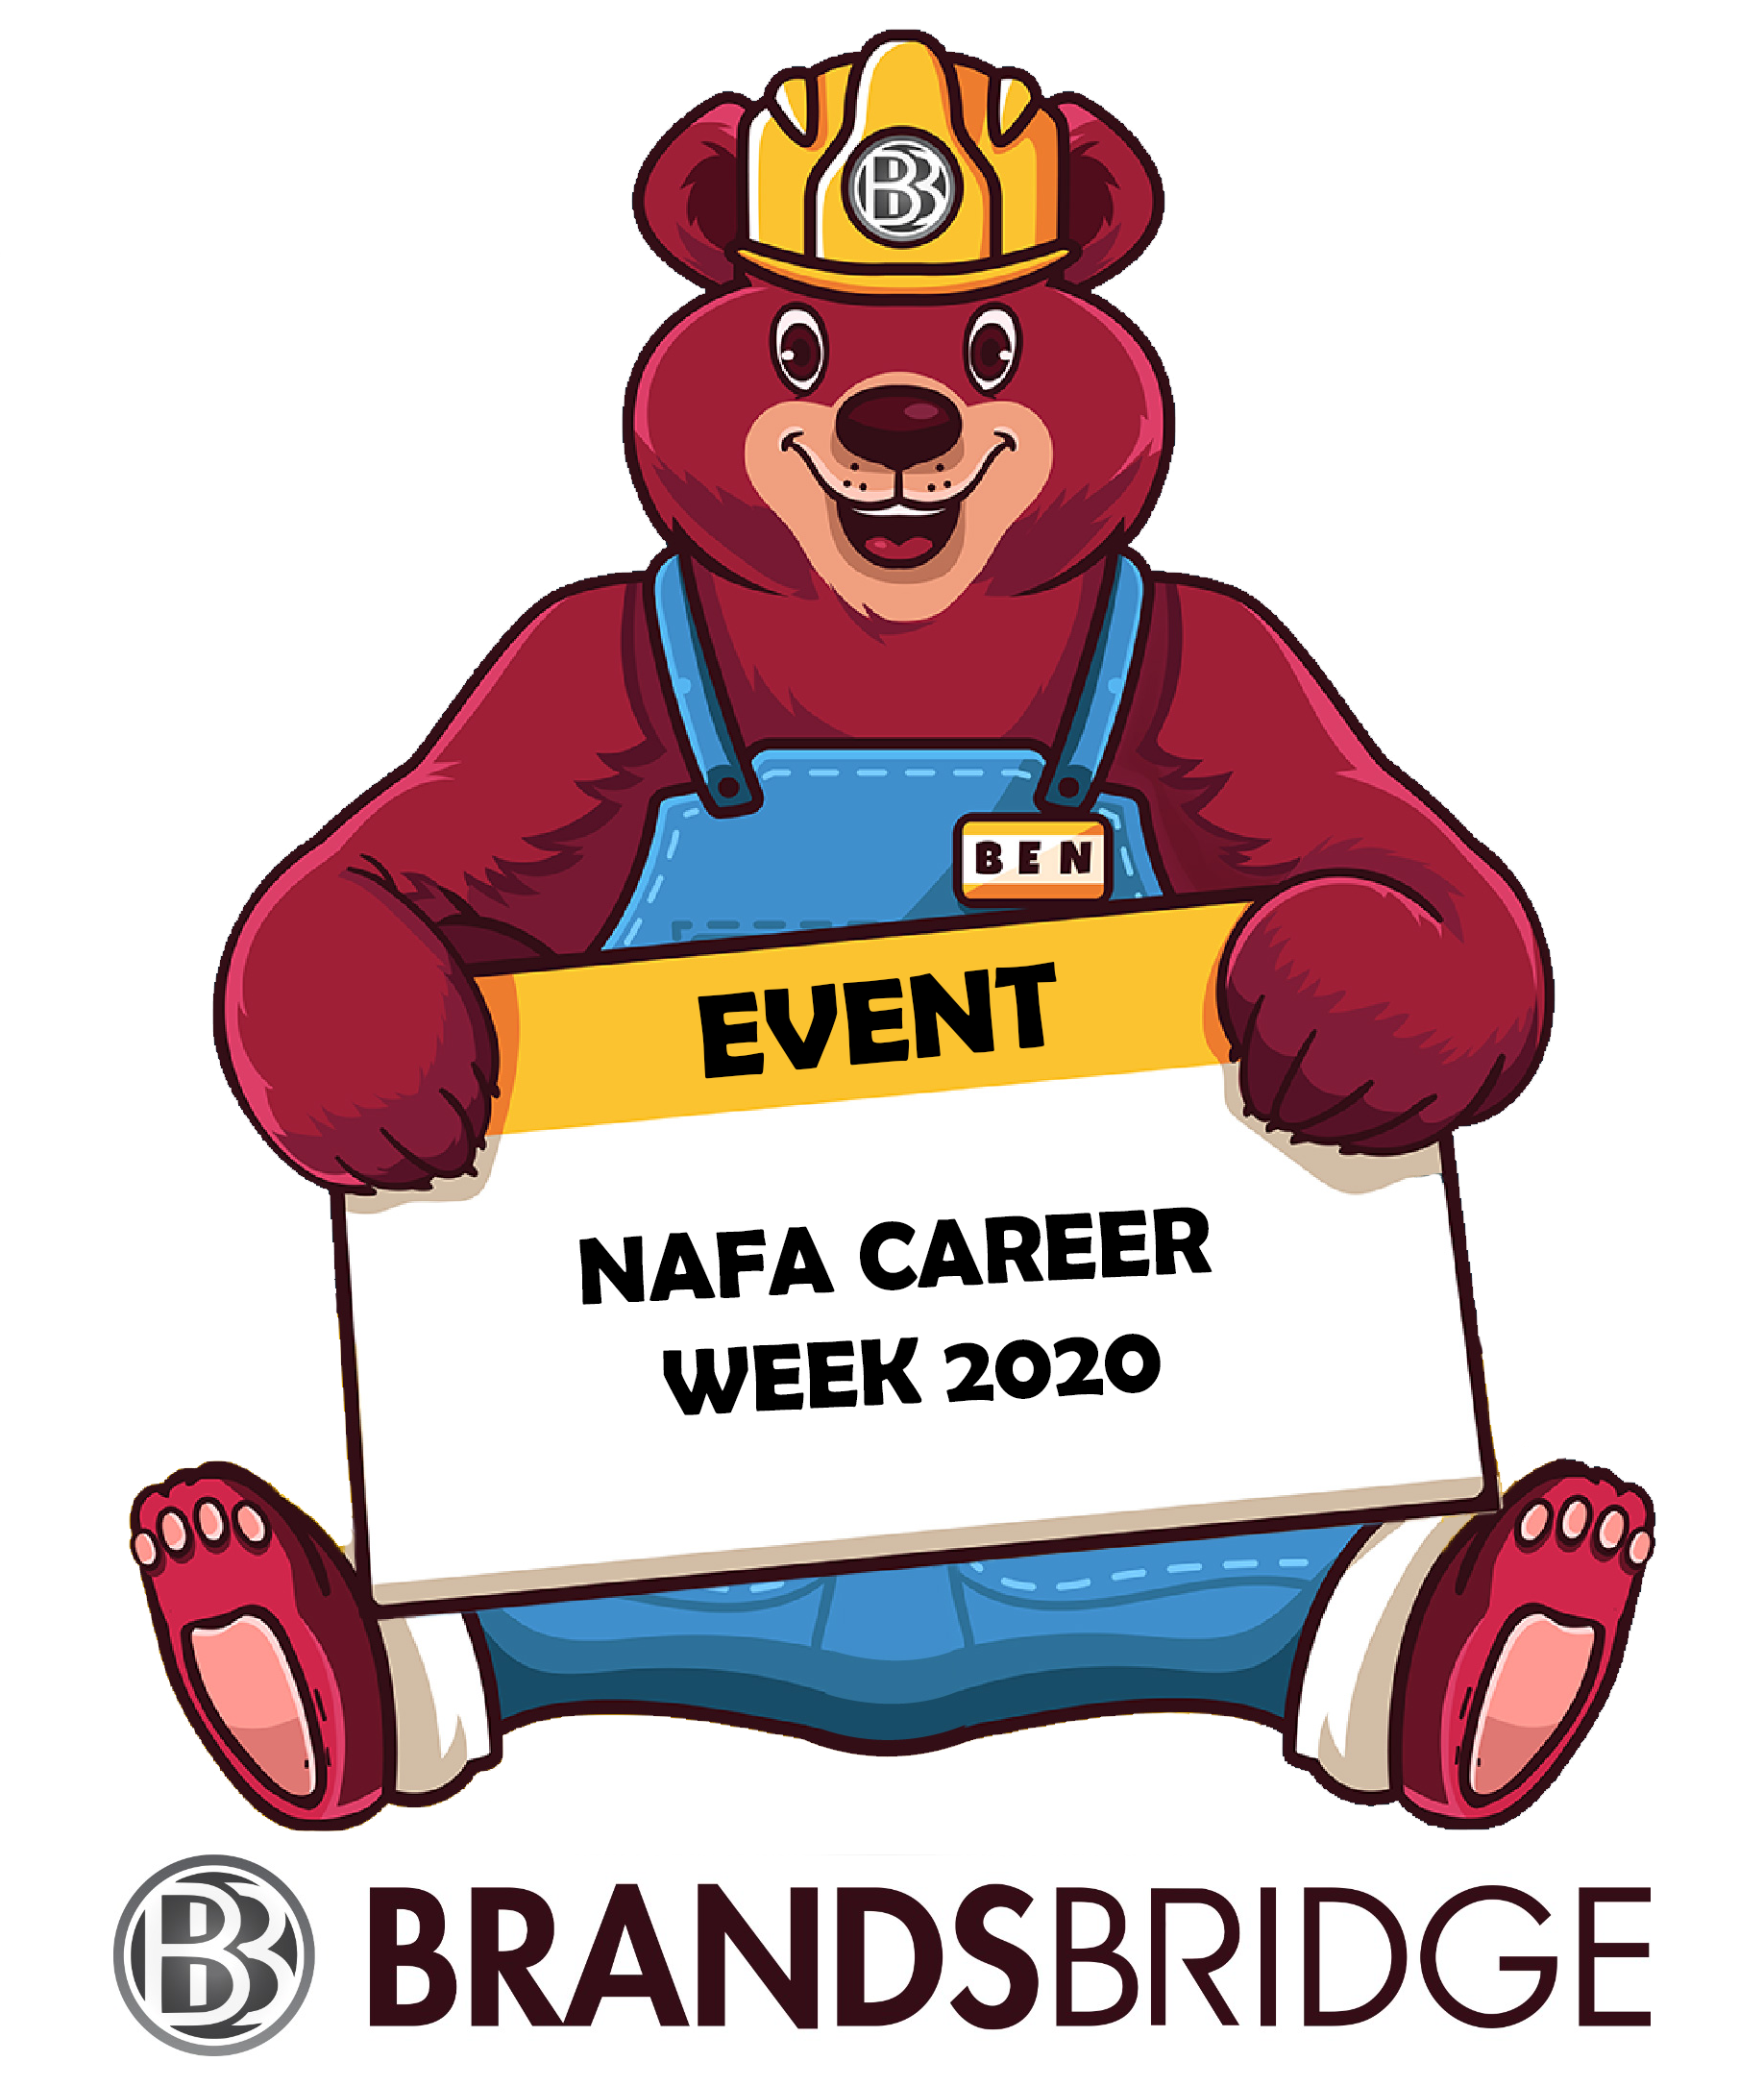 Ben Event Nafa Career Week 2020